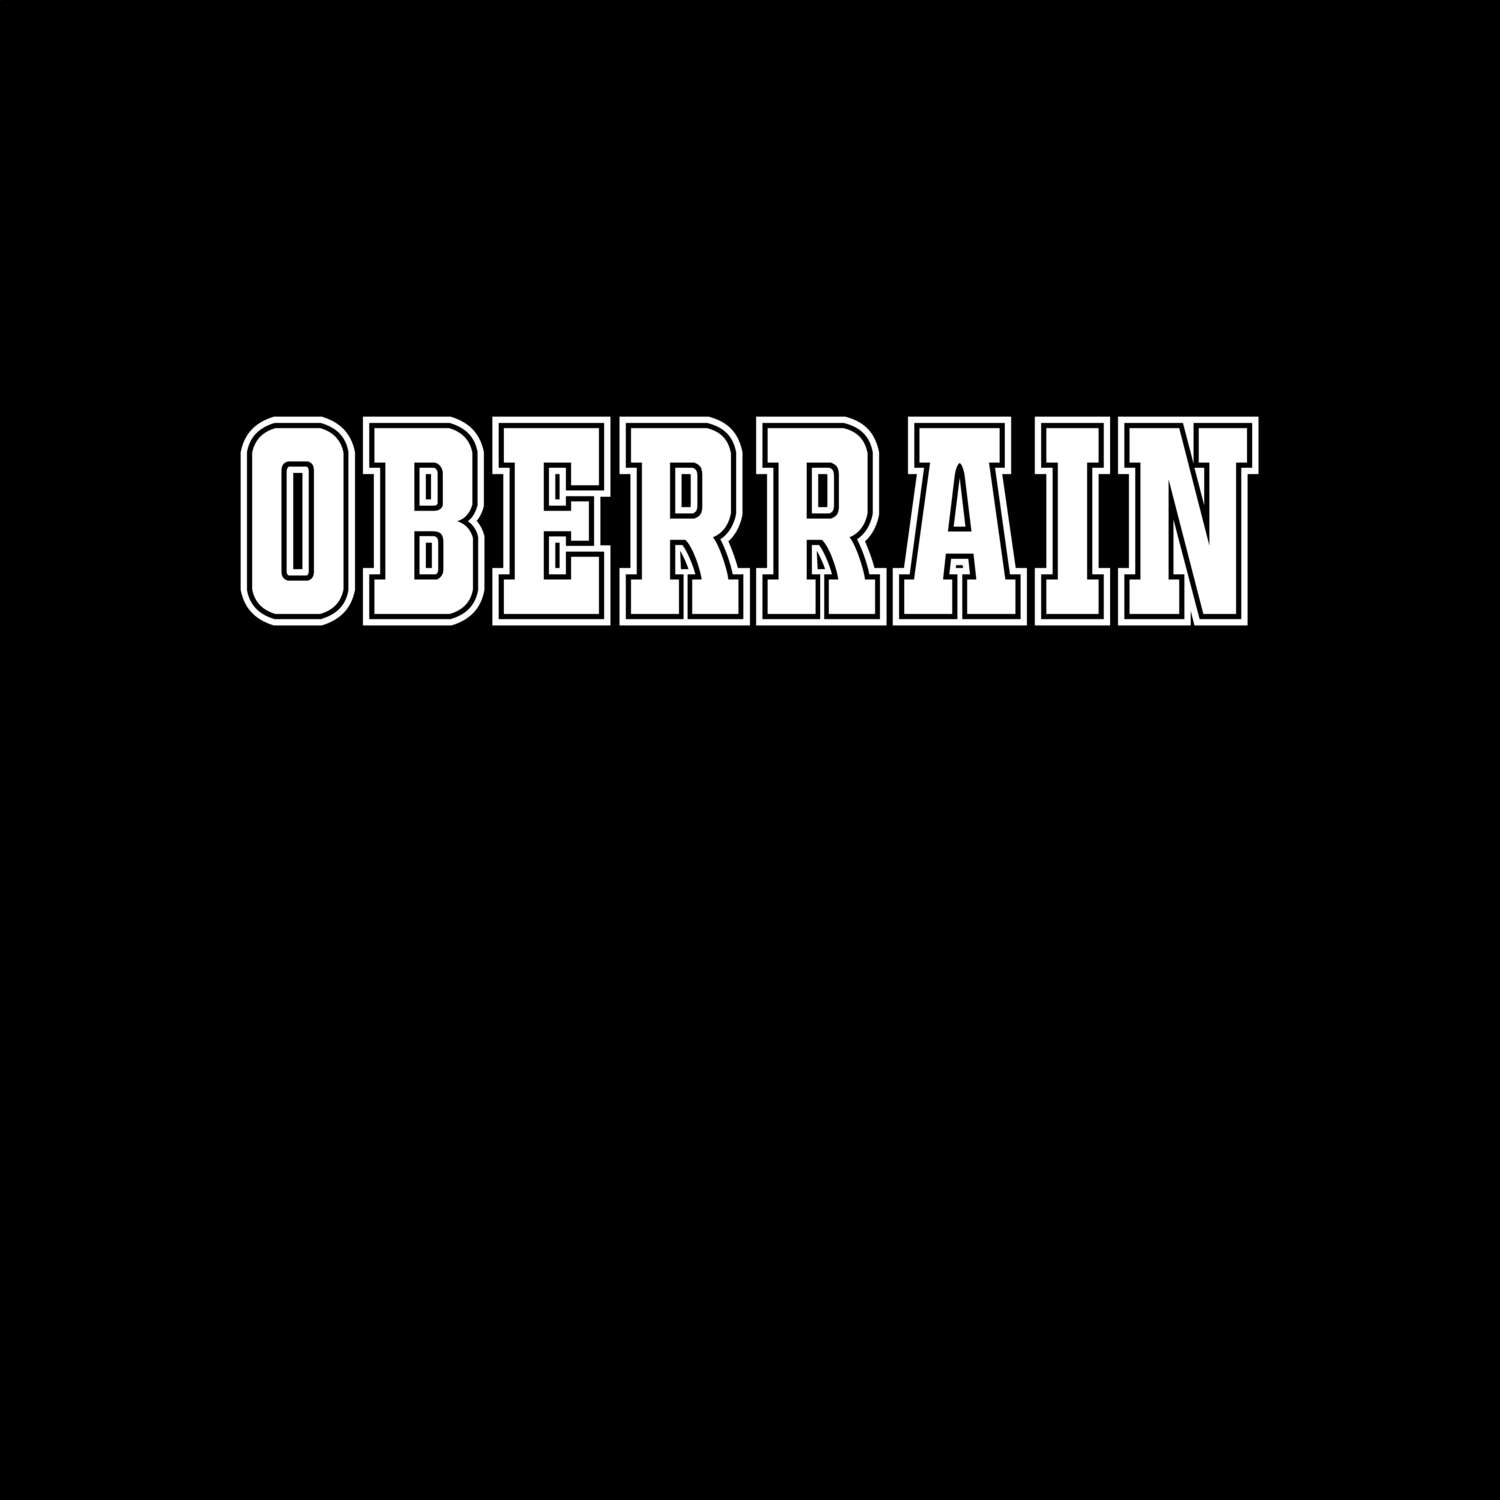 Oberrain T-Shirt »Classic«